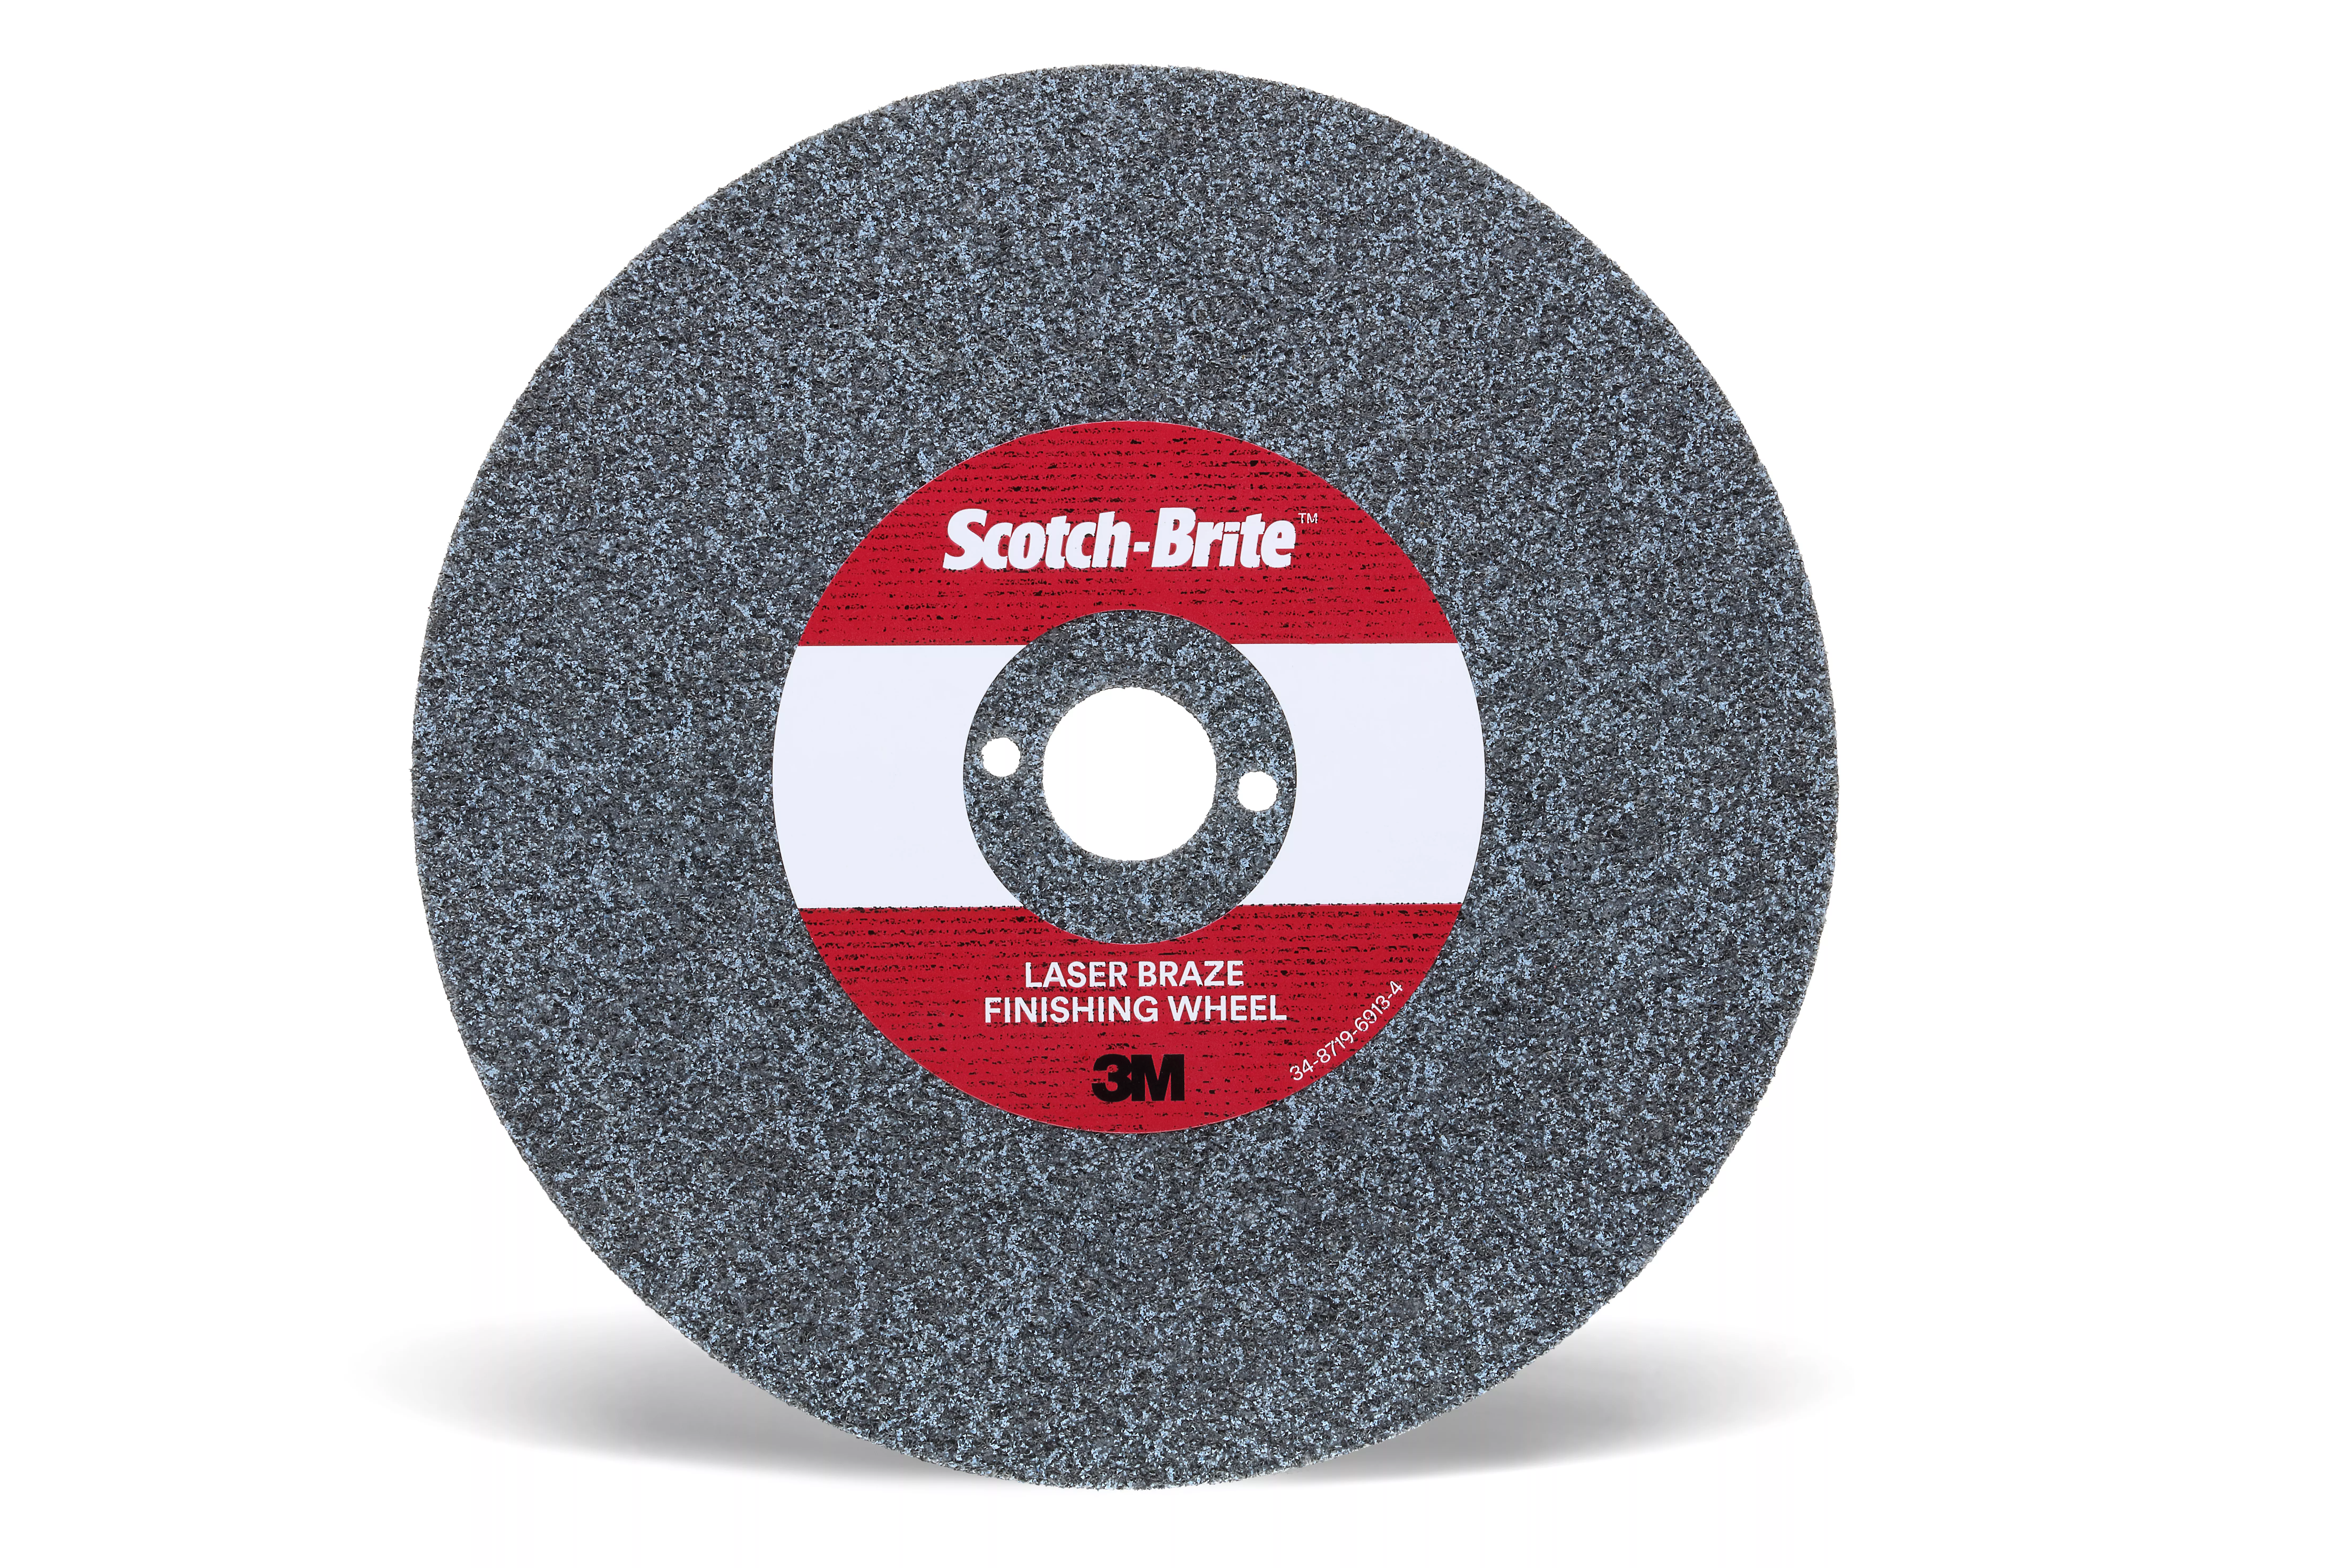 SKU 7100115972 | Scotch-Brite™ Laser Braze Finishing Wheel